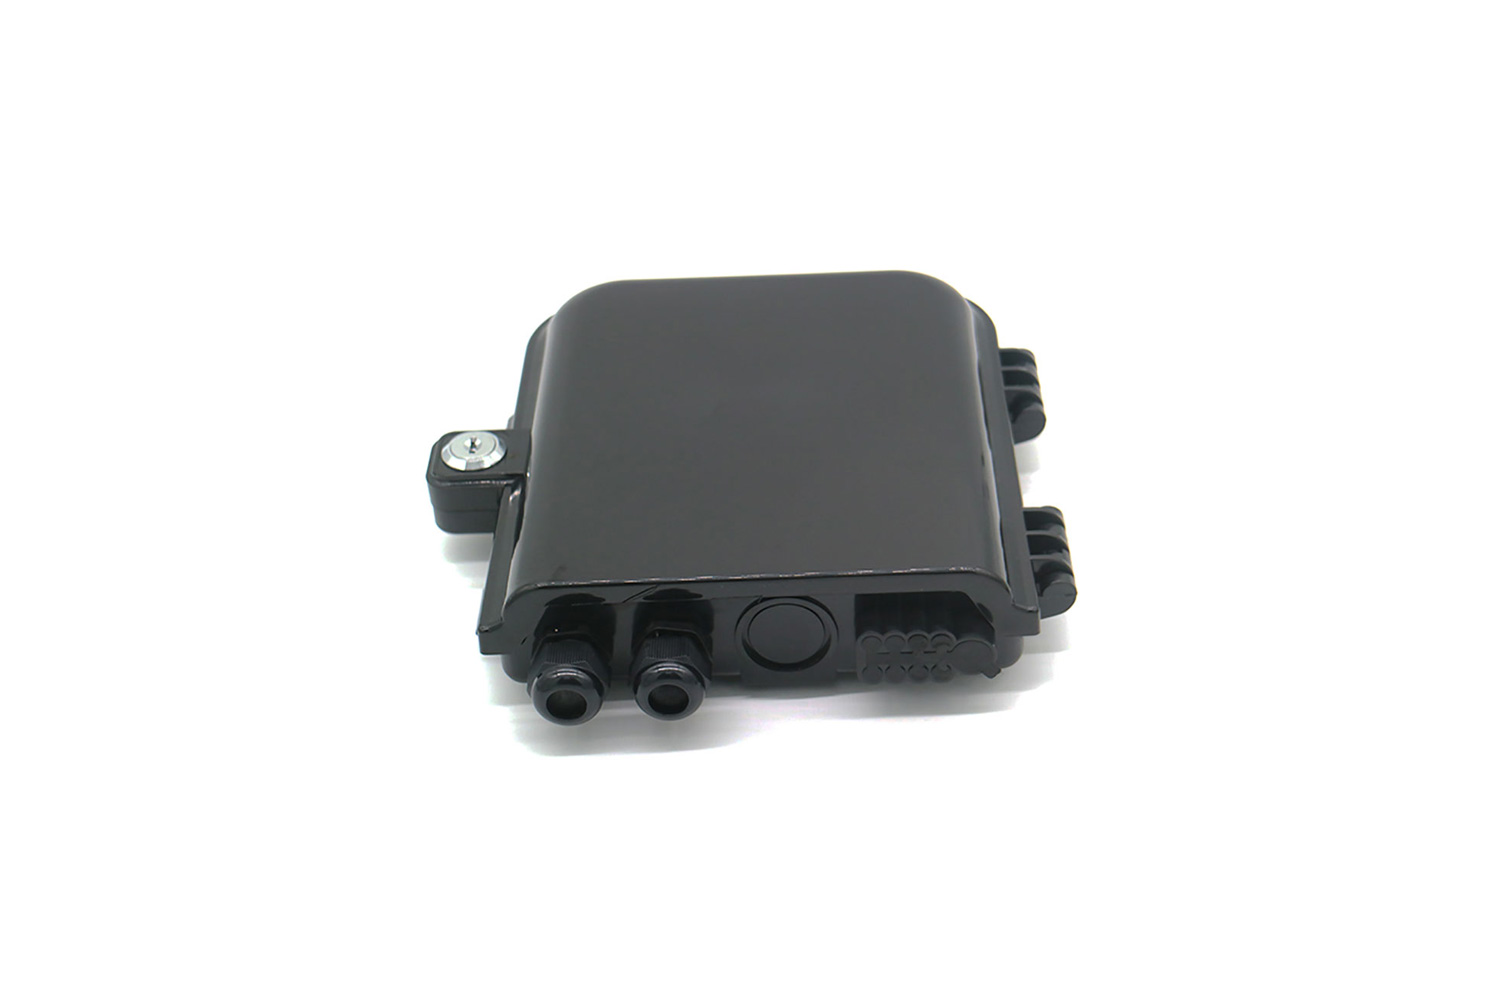 SP 1602 8B 2 Black Fiber Optic Termination Box (5)